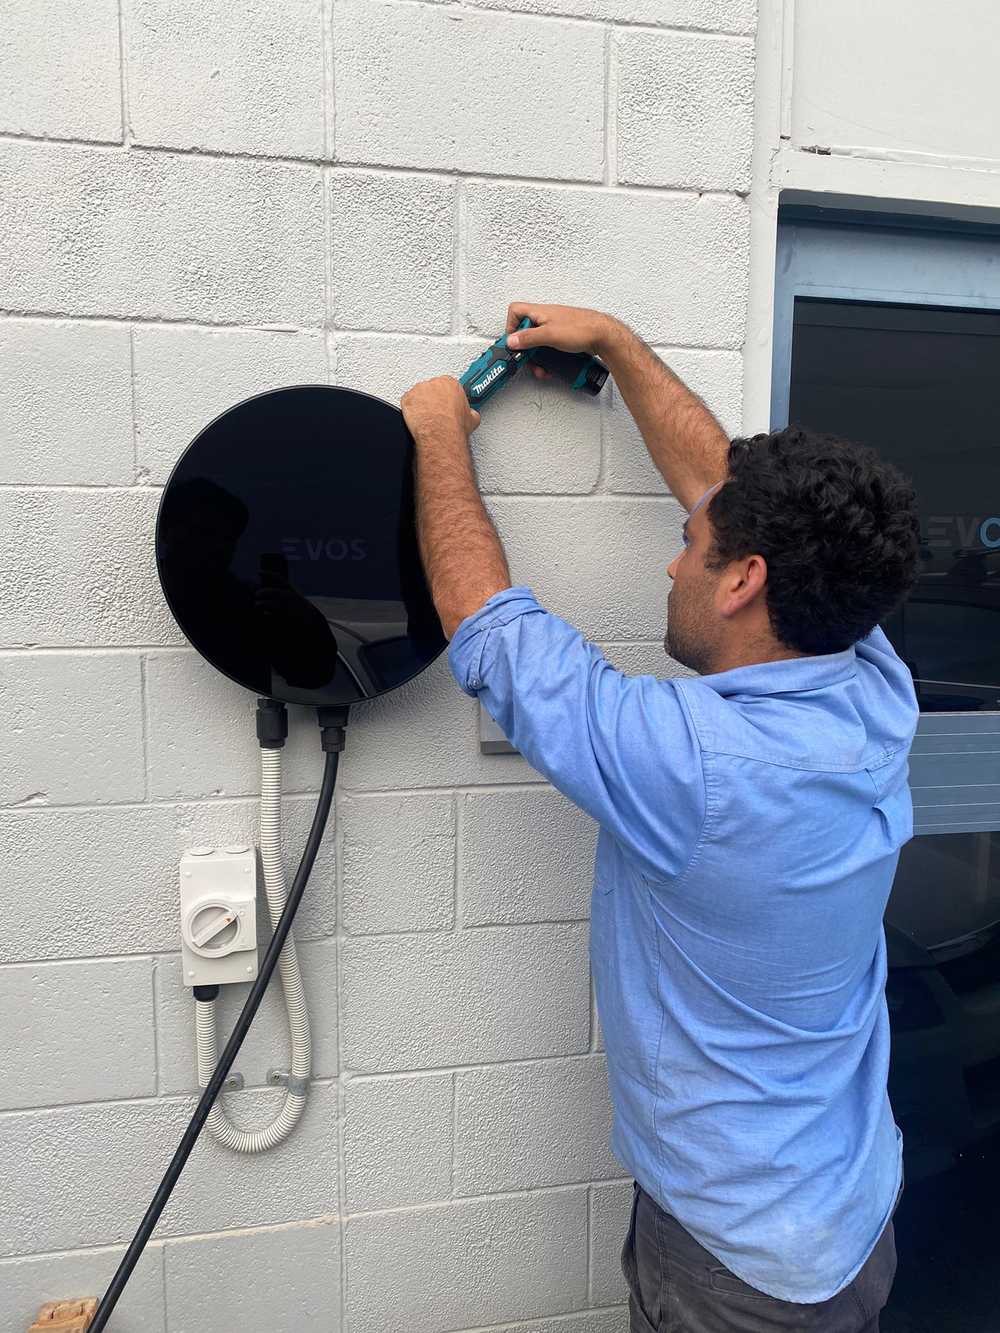 EVOS employee adjusting ev charger